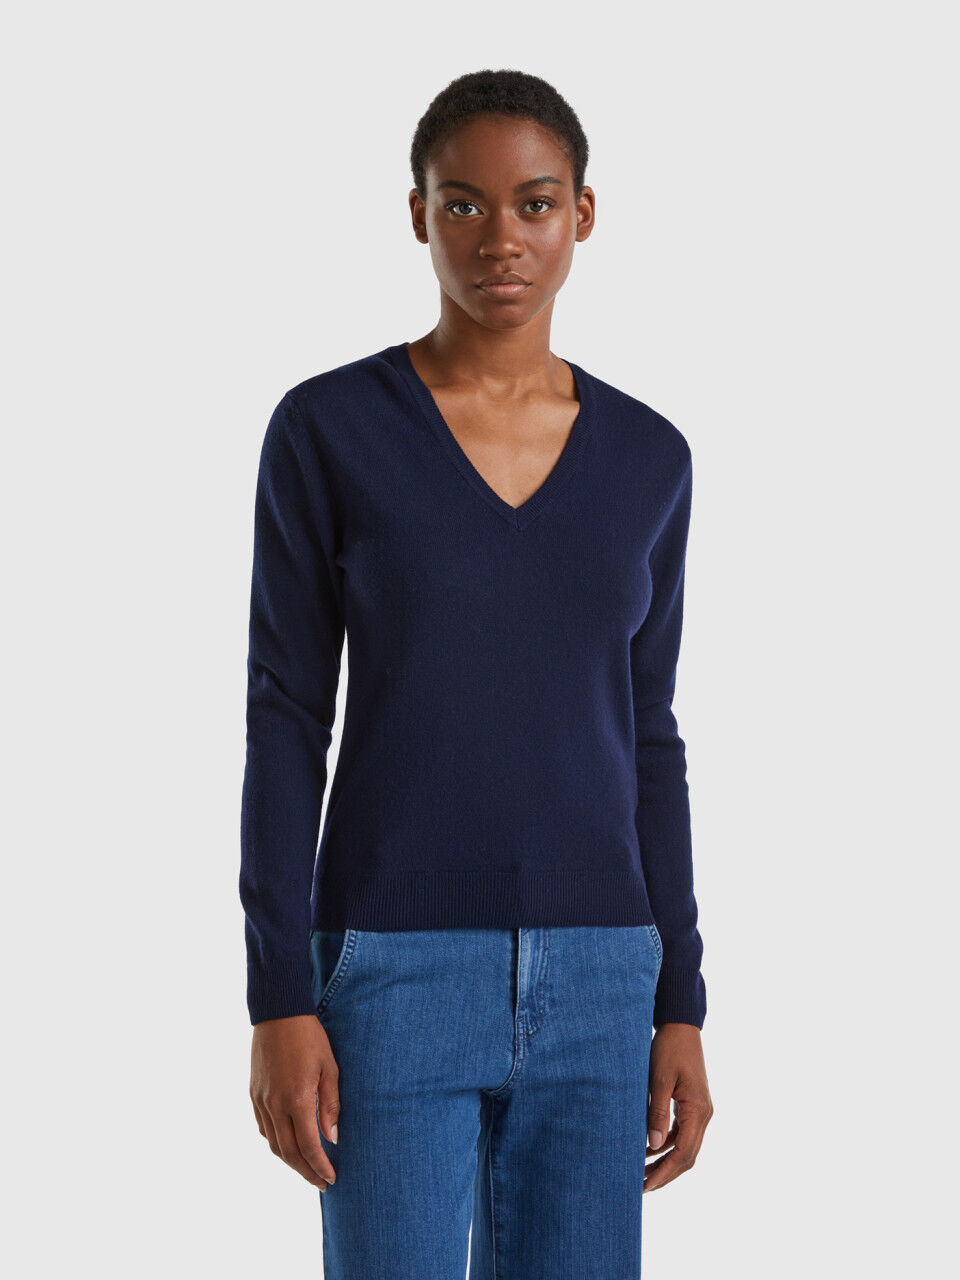 Women's Iconic Merino Wool Knitwear Collection 2023 | Benetton